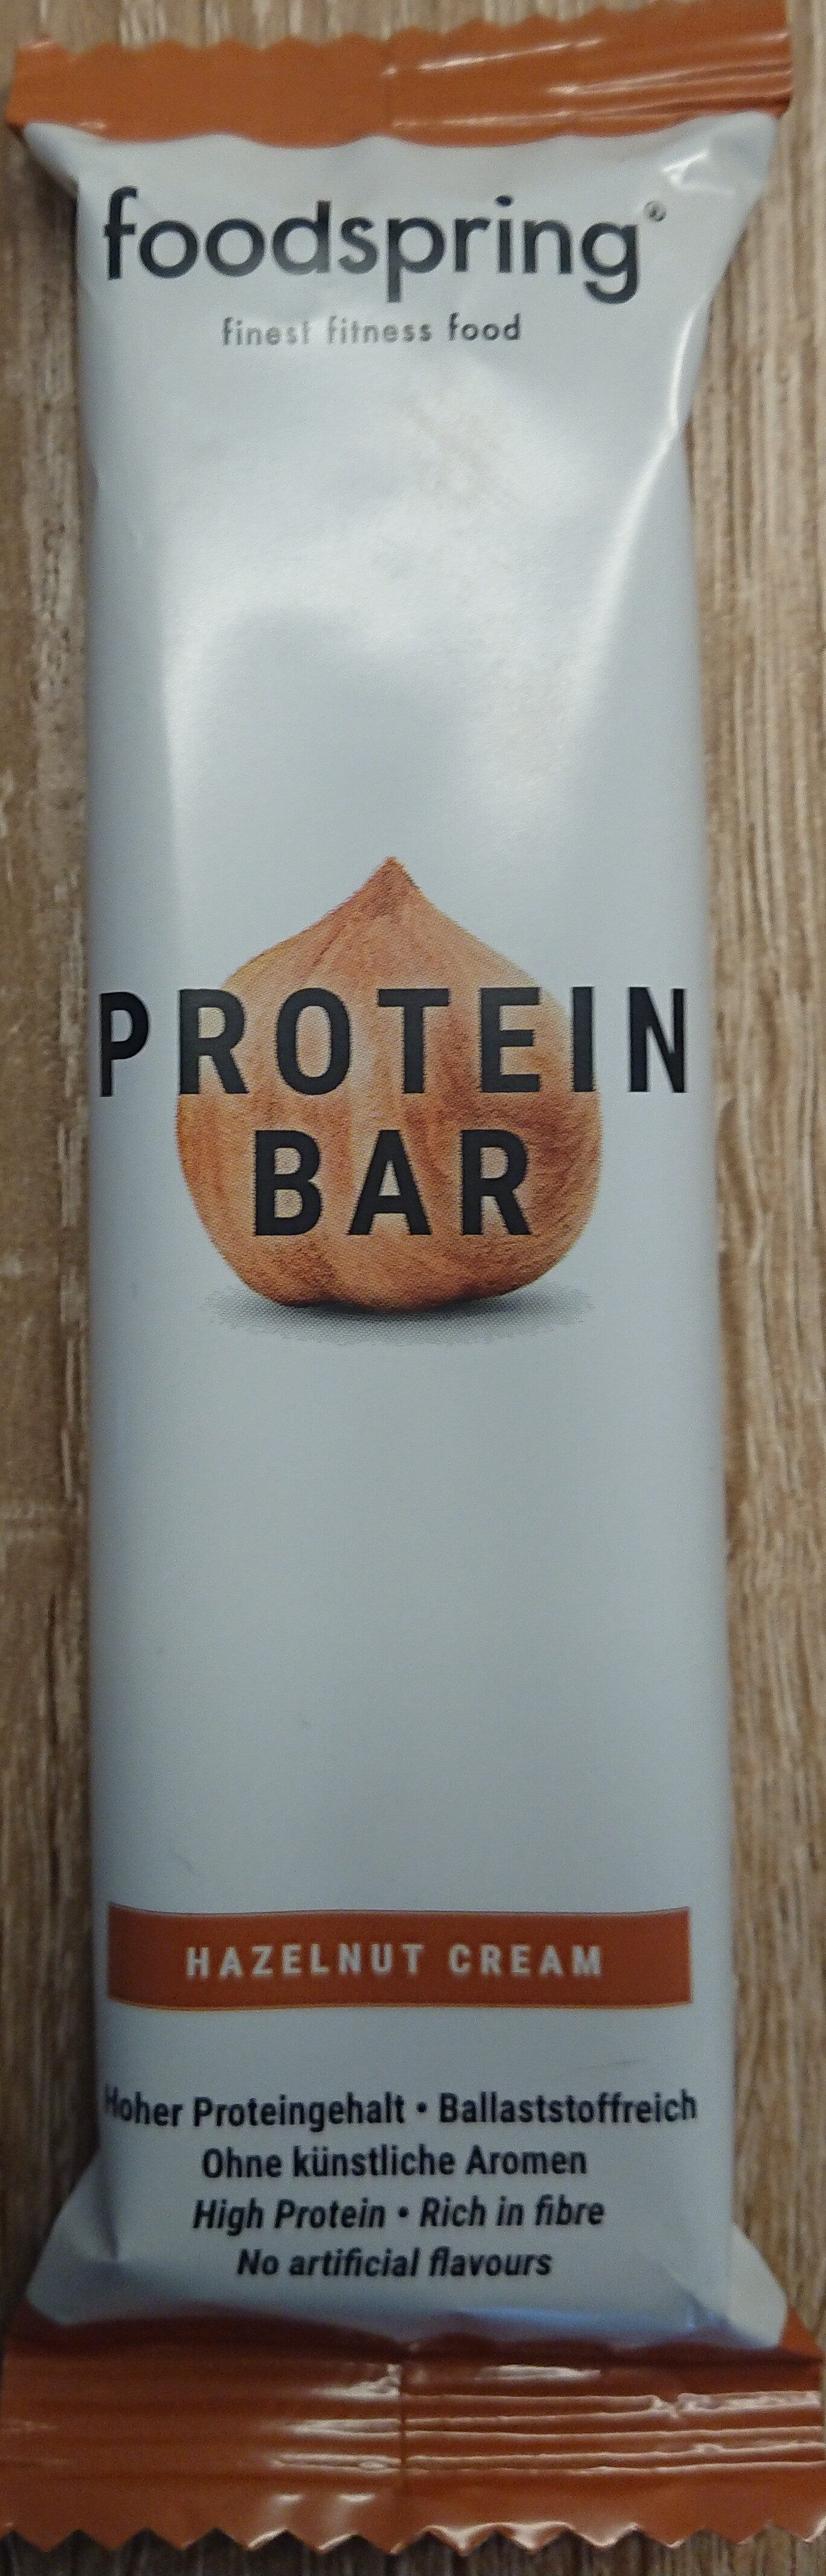 Protein Bar Halzenut Cream - Producte - fr